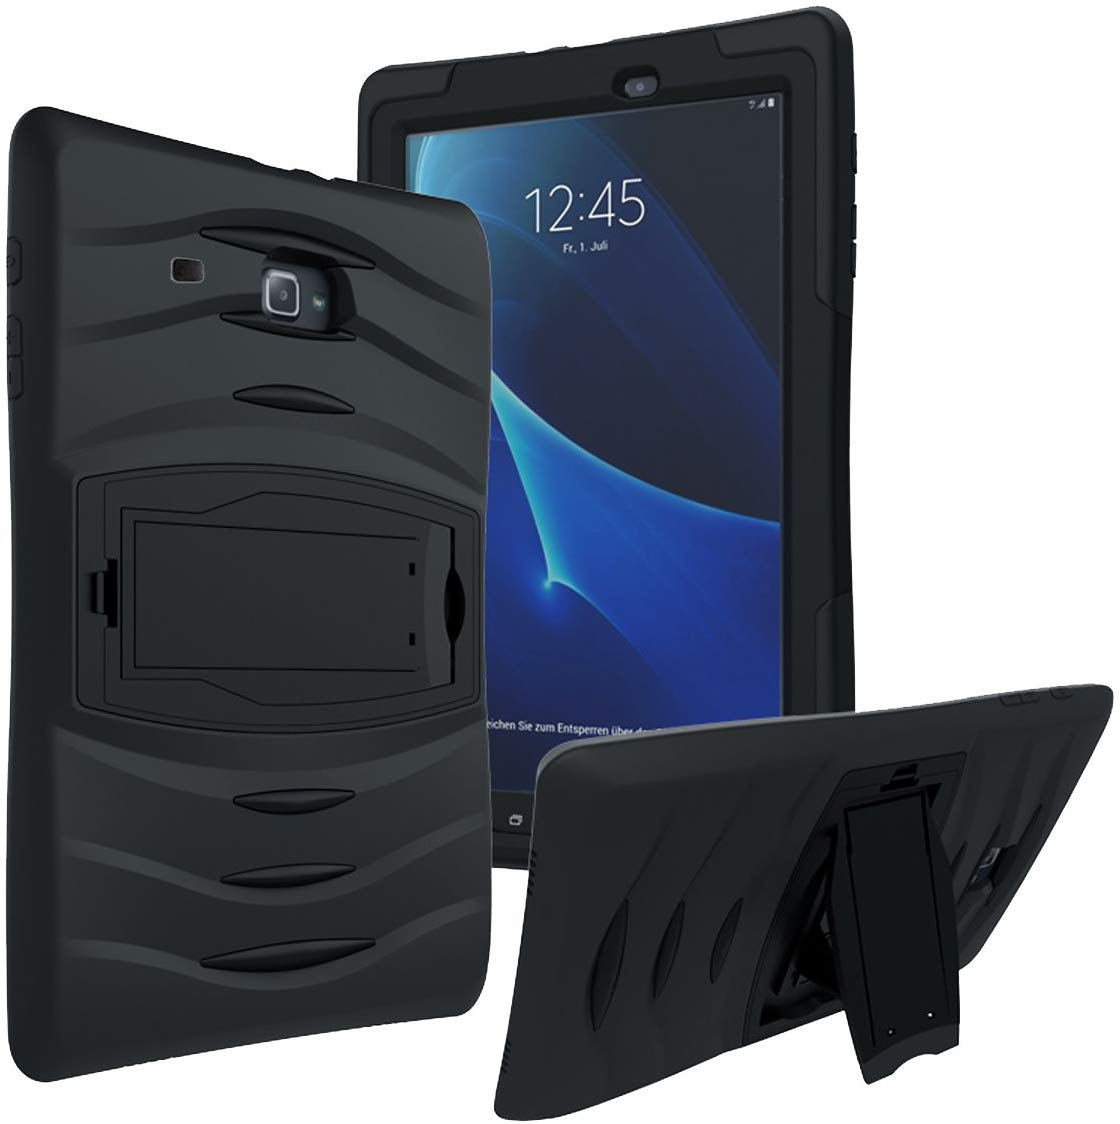 Galaxy Tab A 7.0 SM-T280 2016 Case by KIQ Full-Body Shock Proof Hybrid Heavy Duty Armor Protective Case for Samsung Tab A 7-inch T280 T285 (Armor Black)